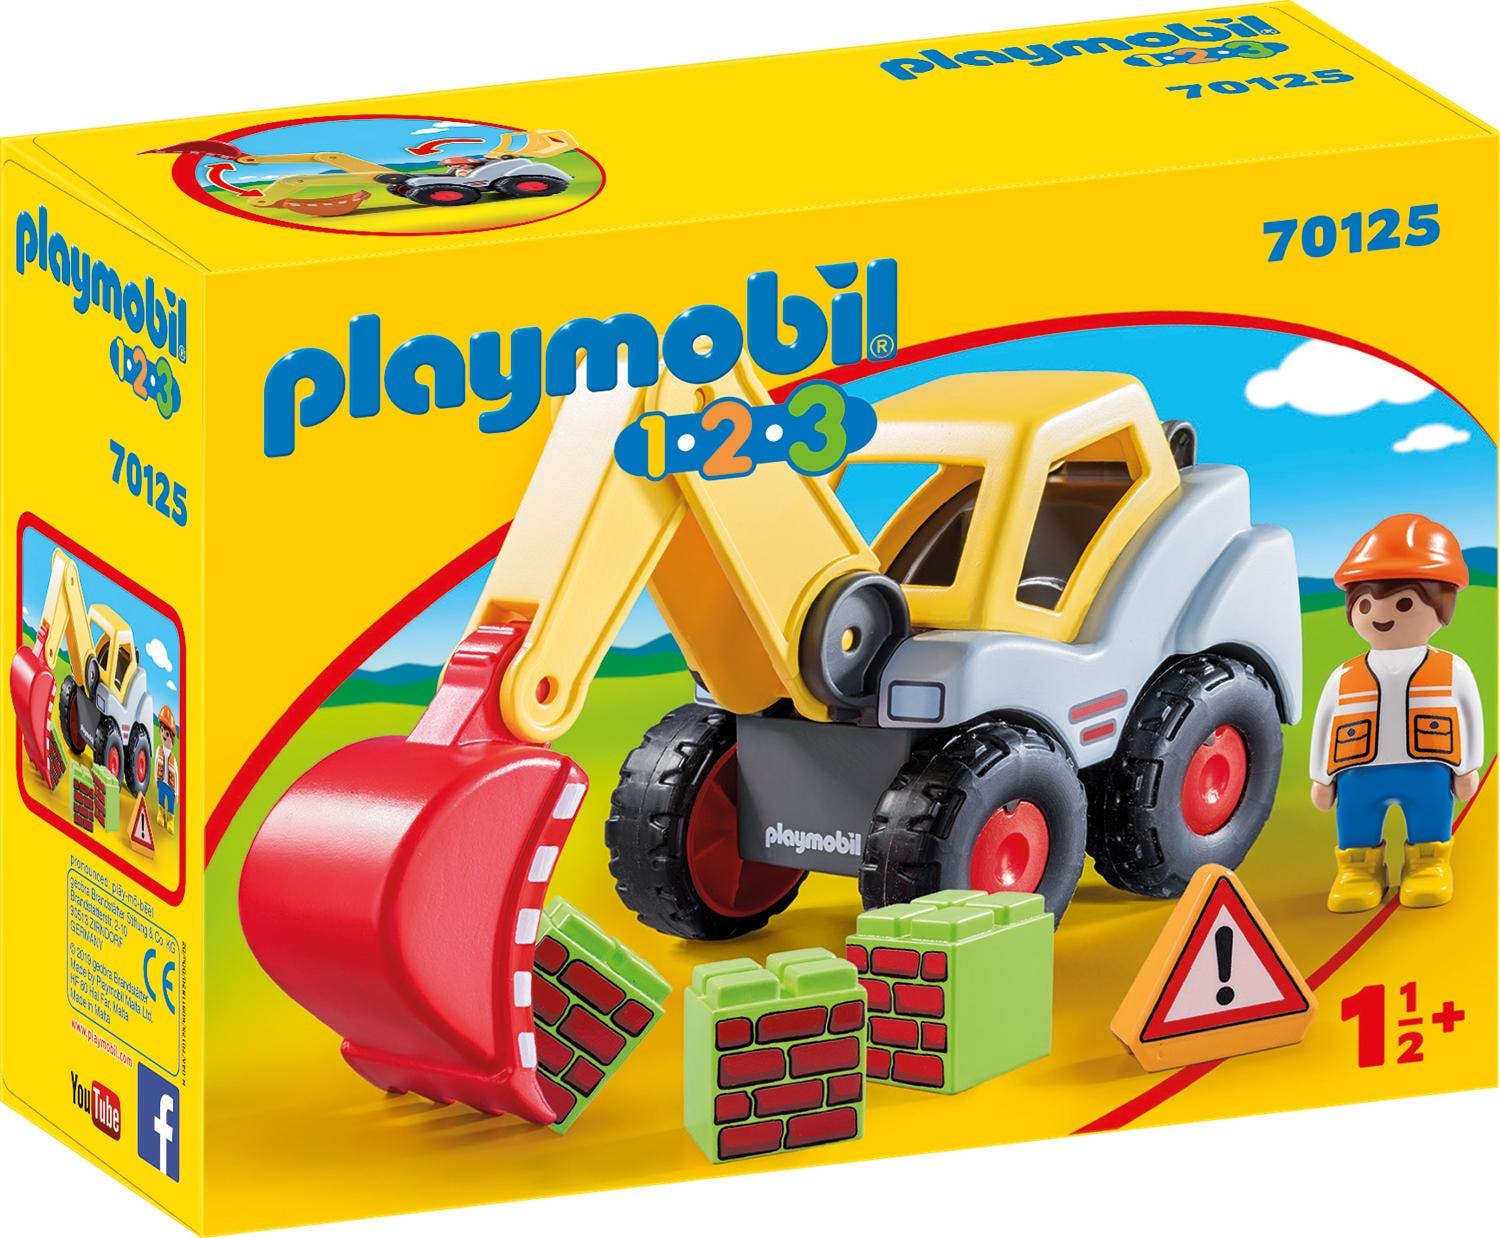 Konstruktions-Spielset »Schaufelbagger (70125), Playmobil 123«, Made in Europe